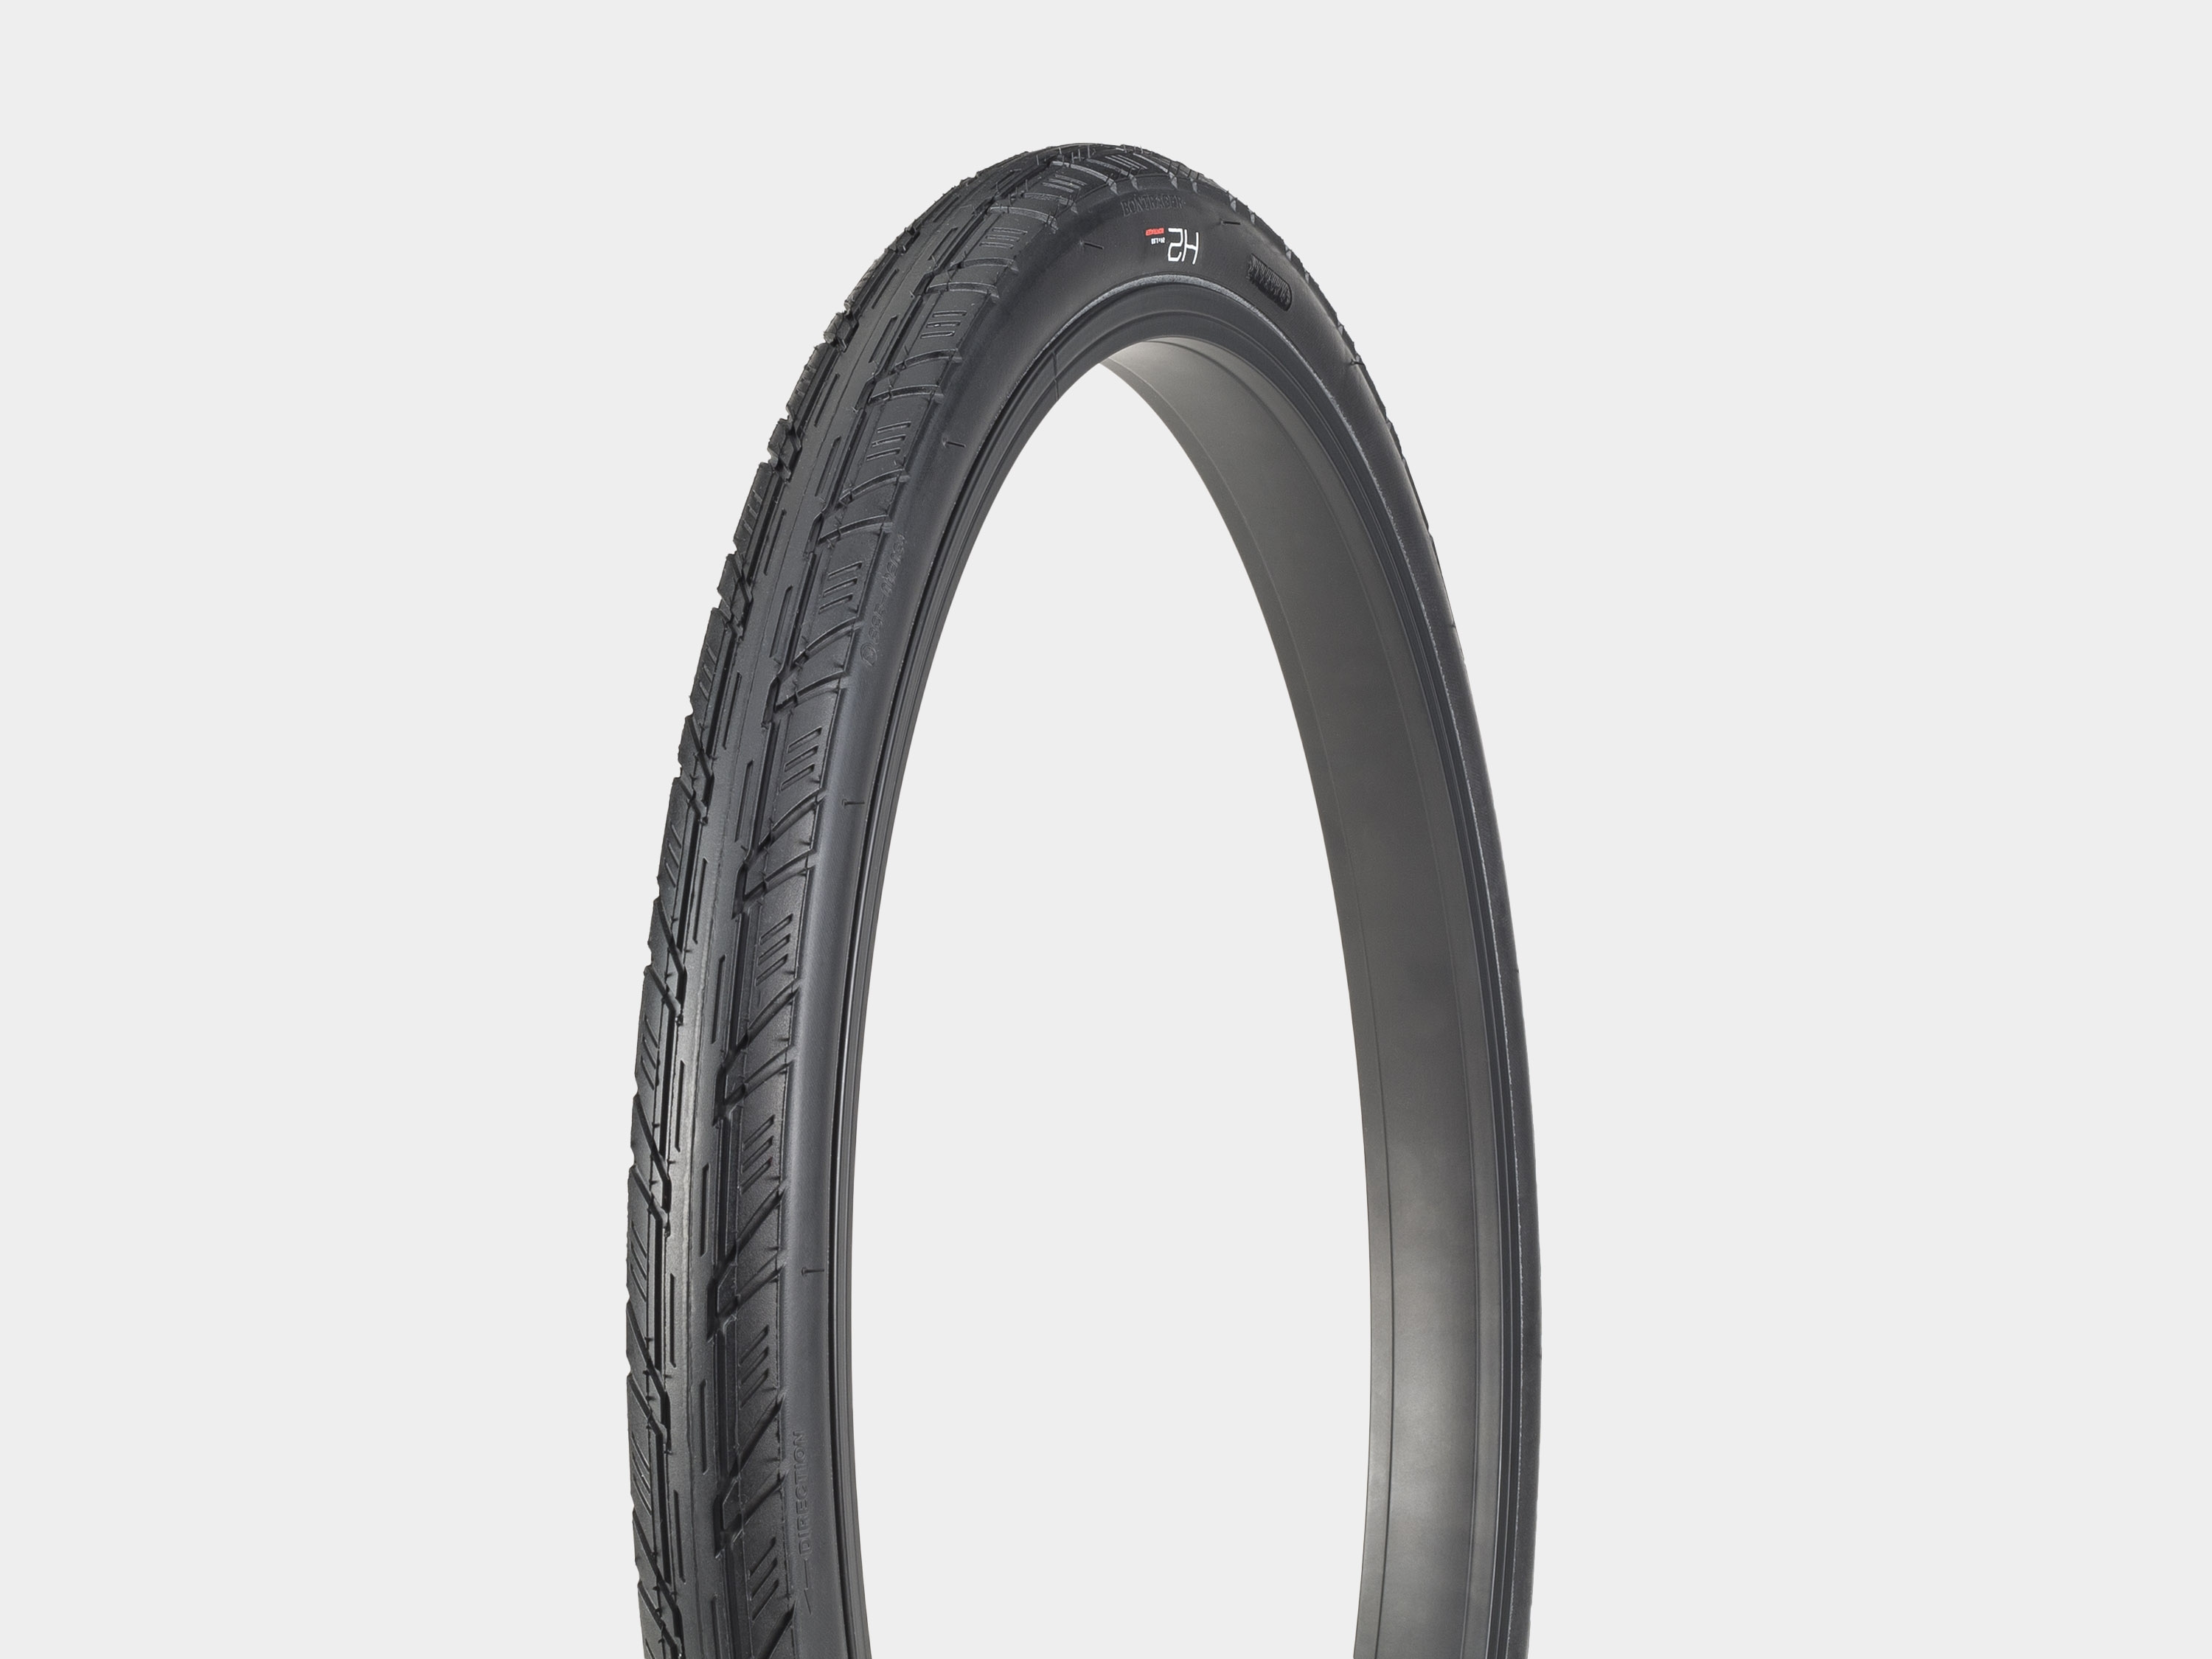 700c hybrid tires